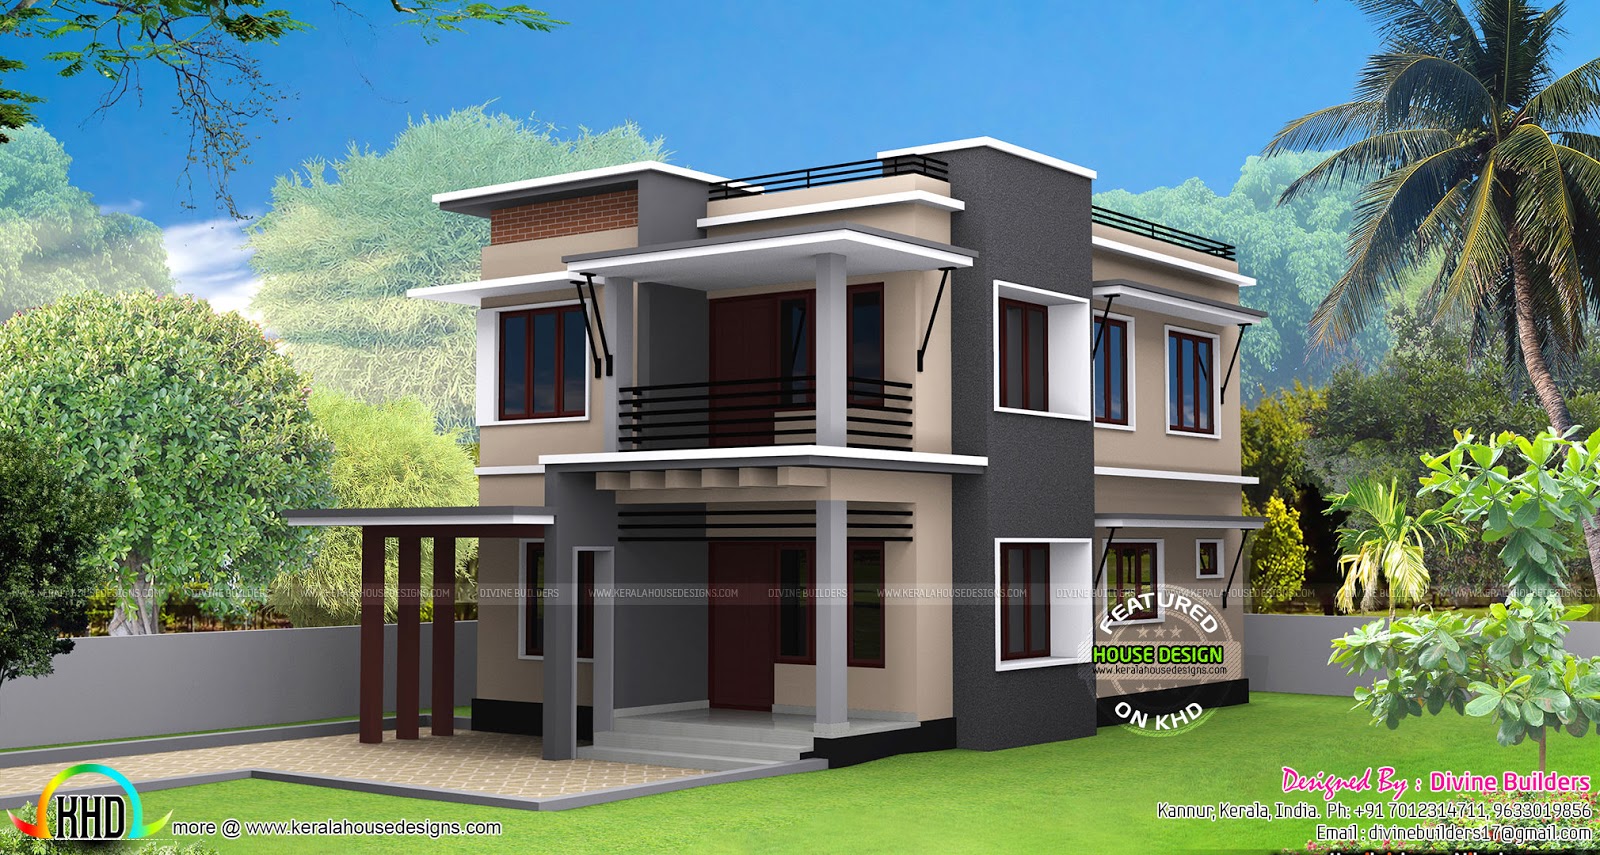 30 Lakhs Rupees cost estimated modern house Kerala home 